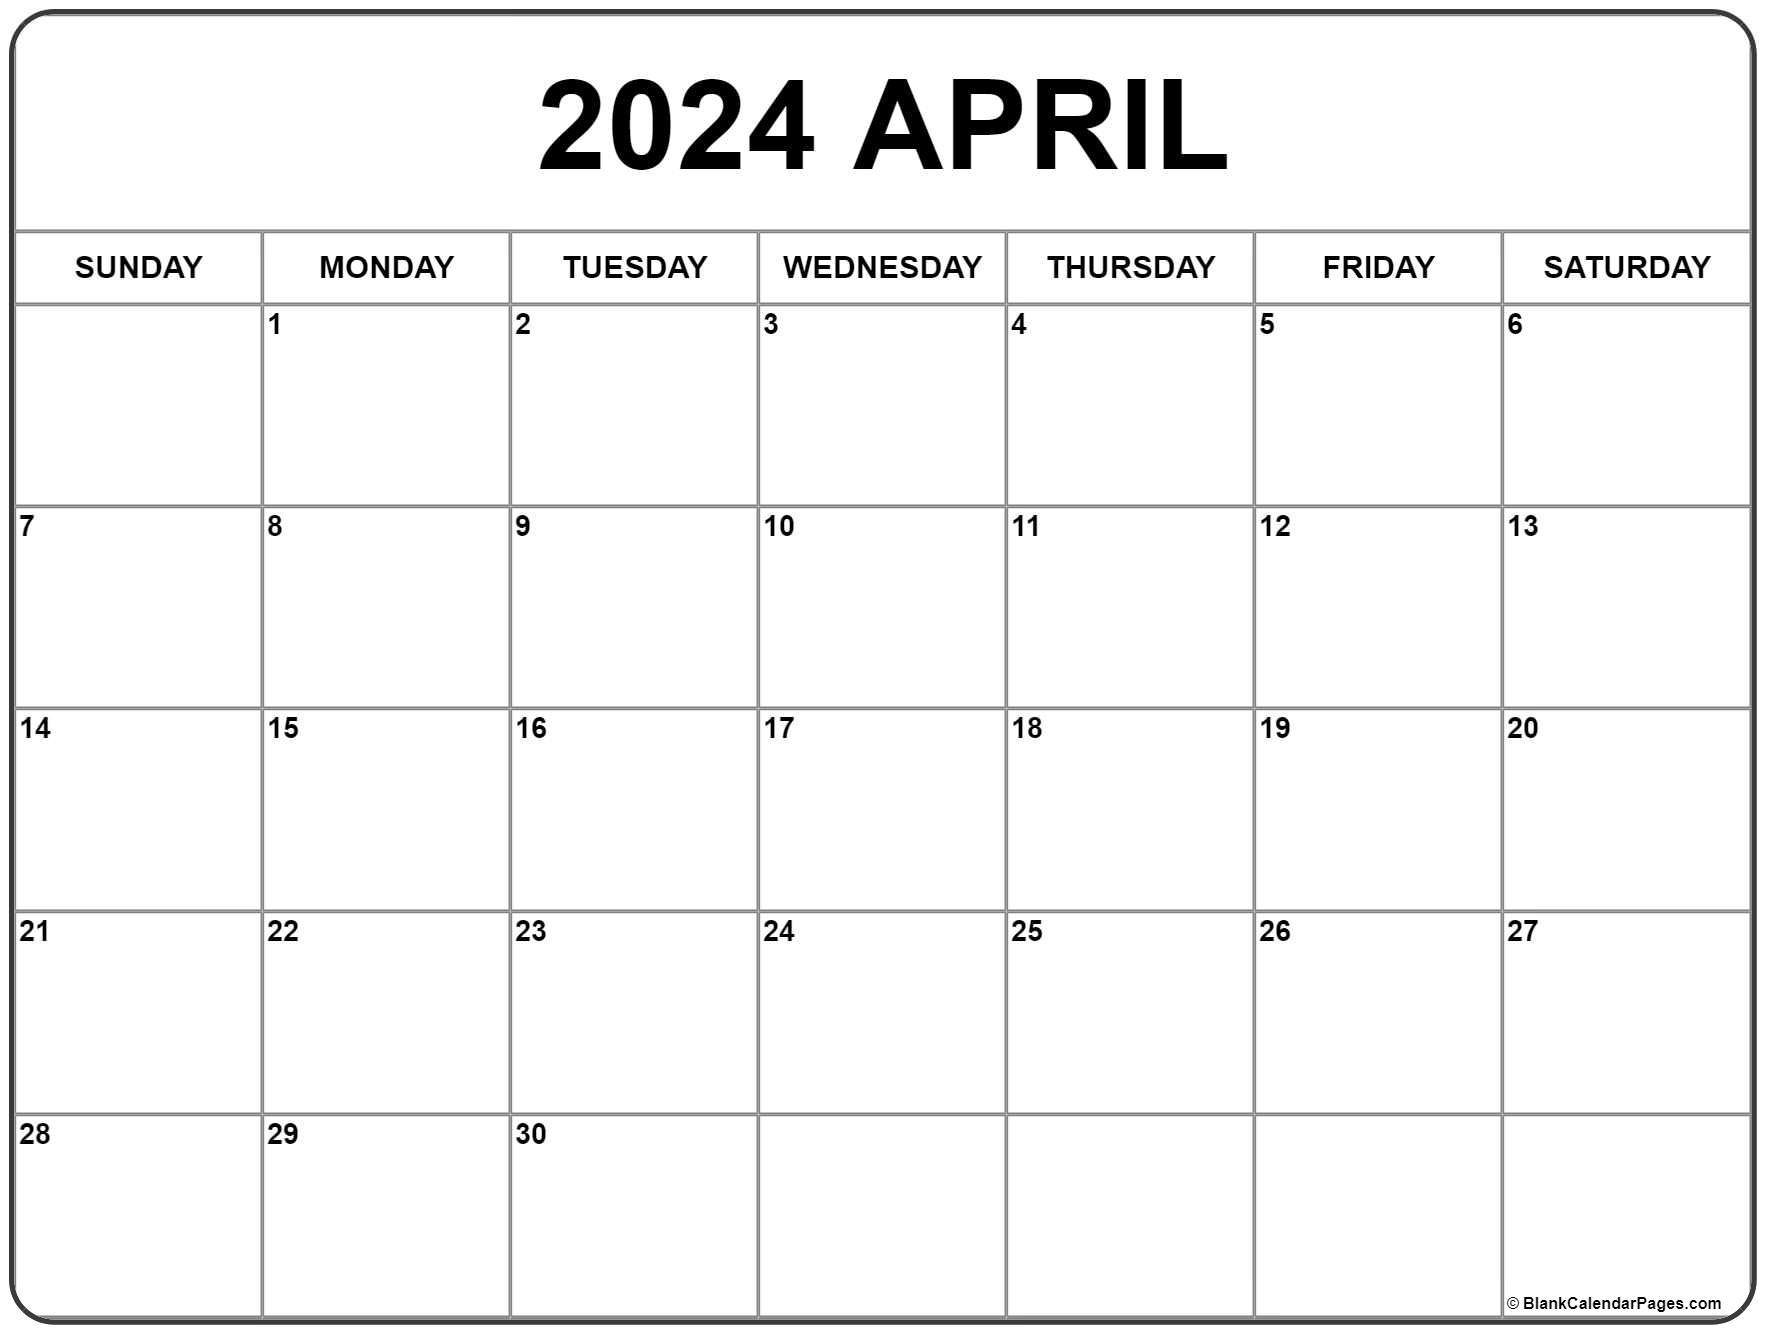 April 2023 calendar free printable calendar